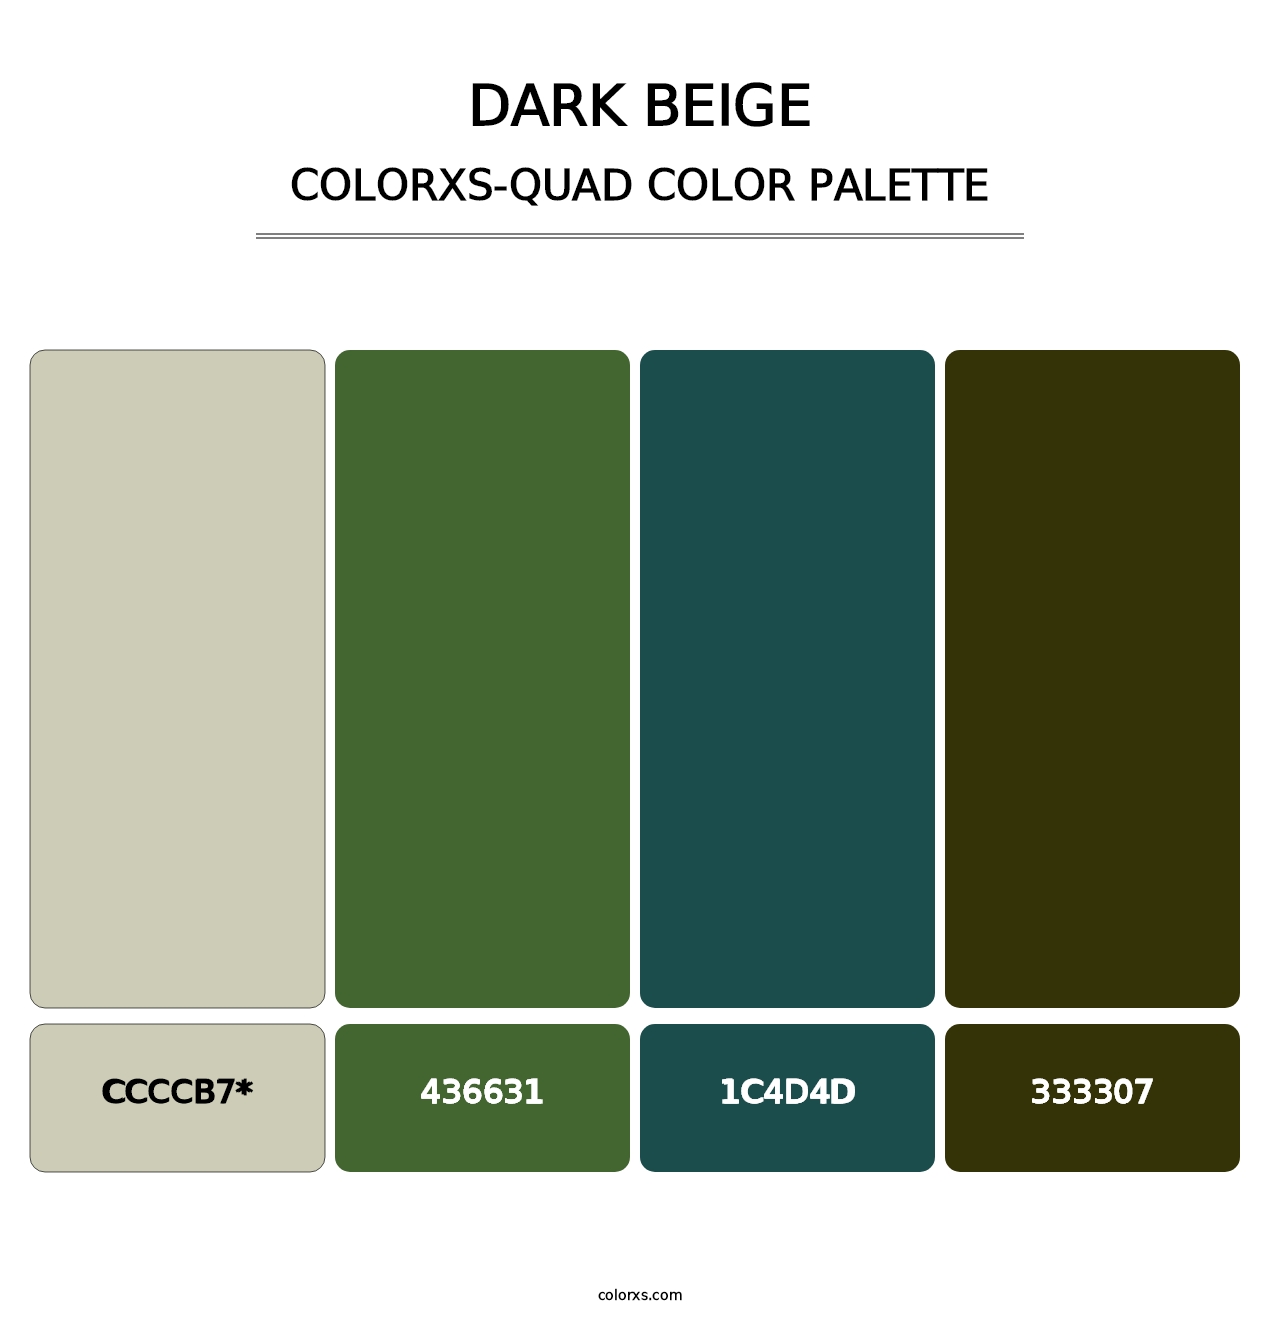 Dark Beige - Colorxs Quad Palette